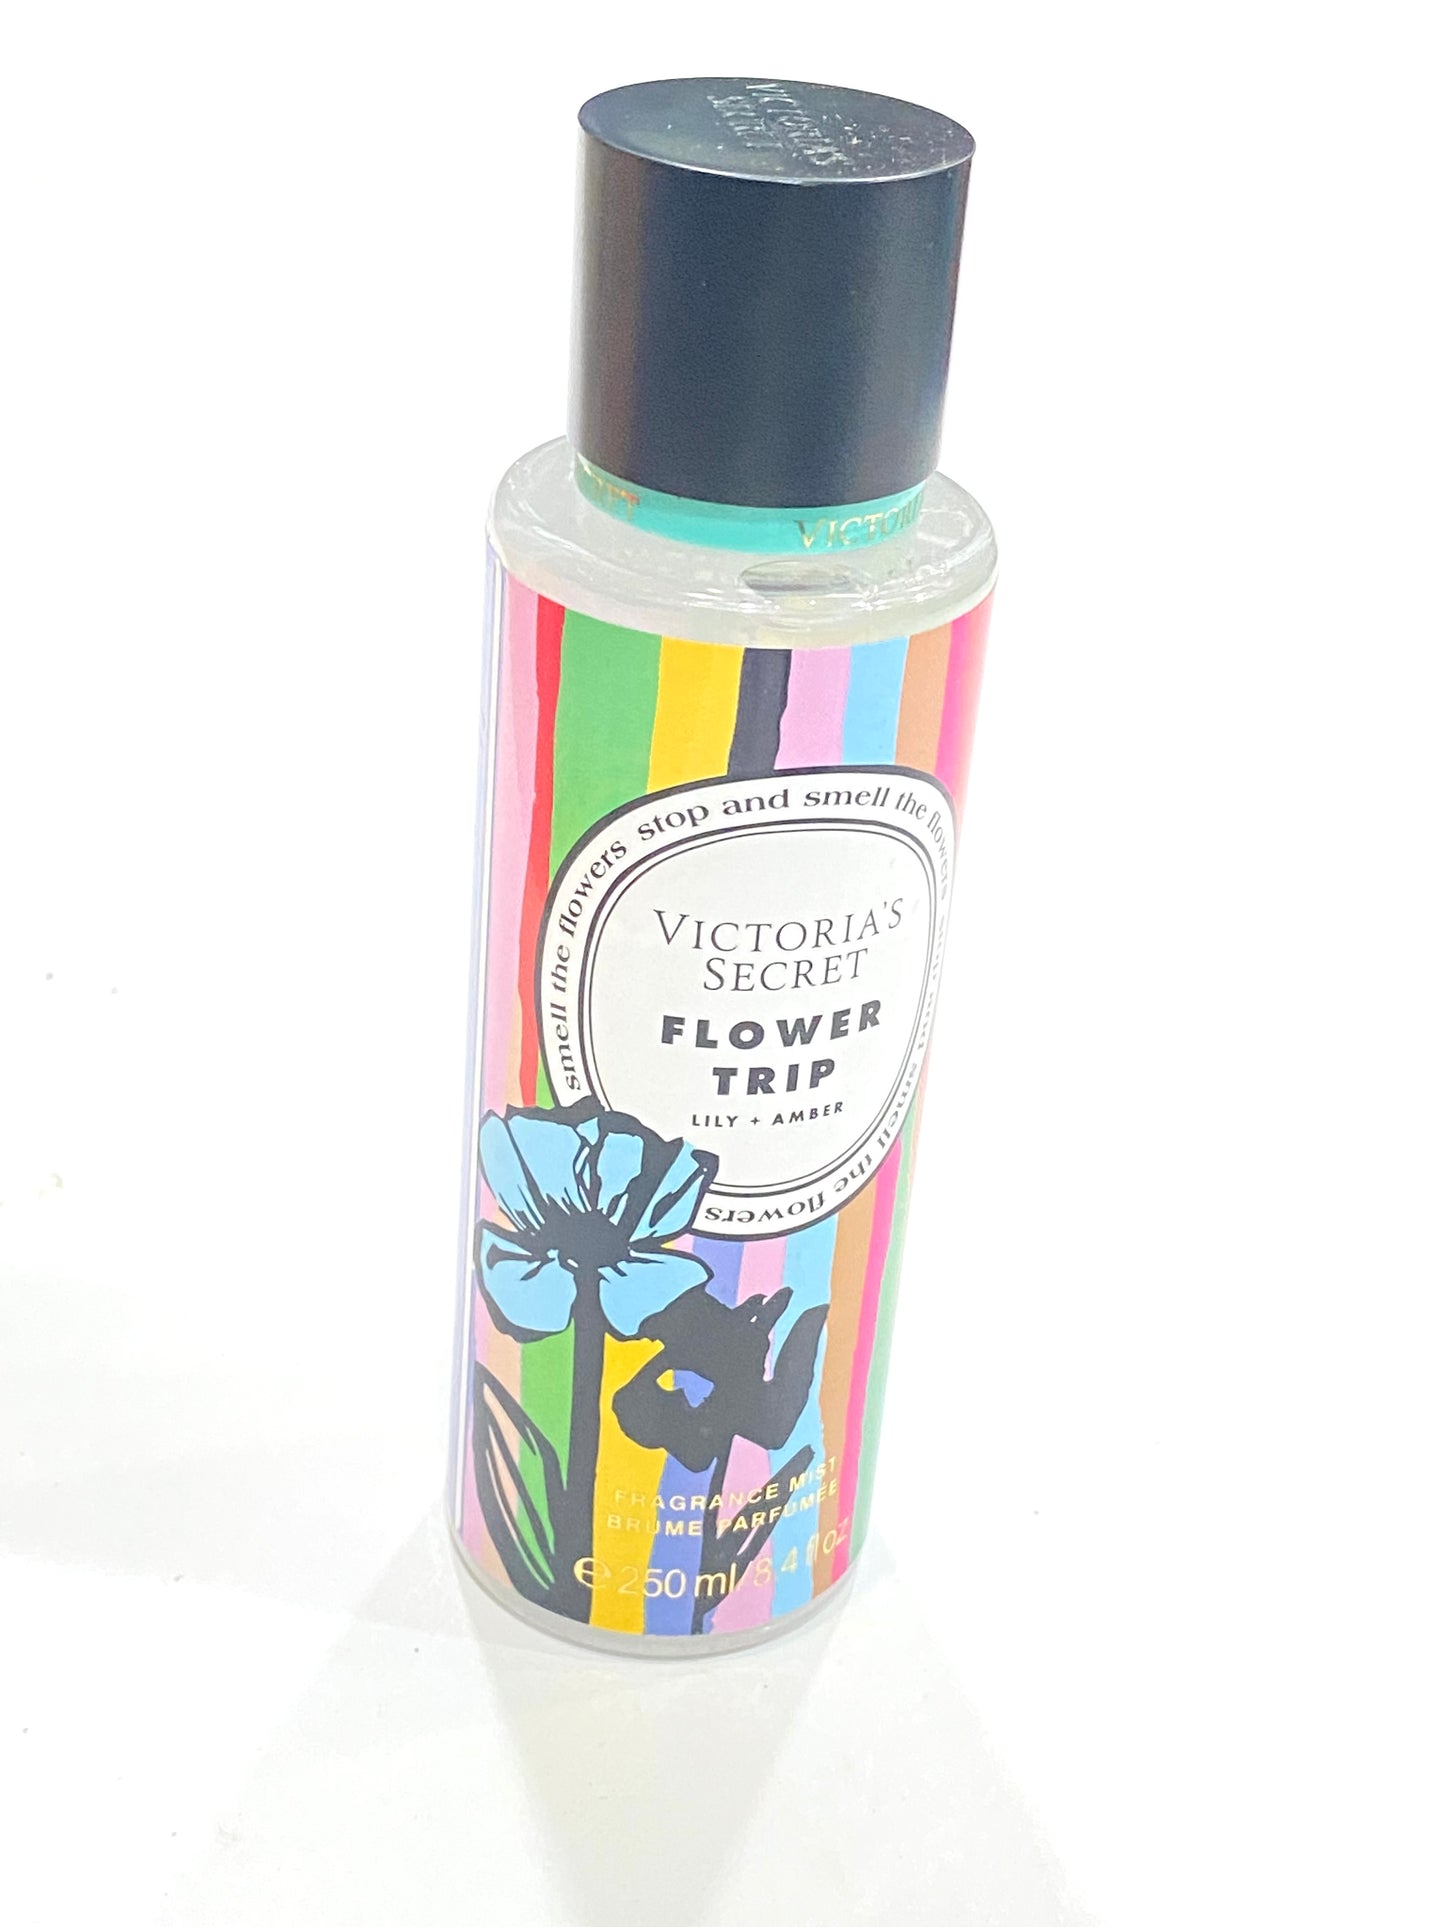 Victoria’s Secret Flower Trip Fragrance Body Mist